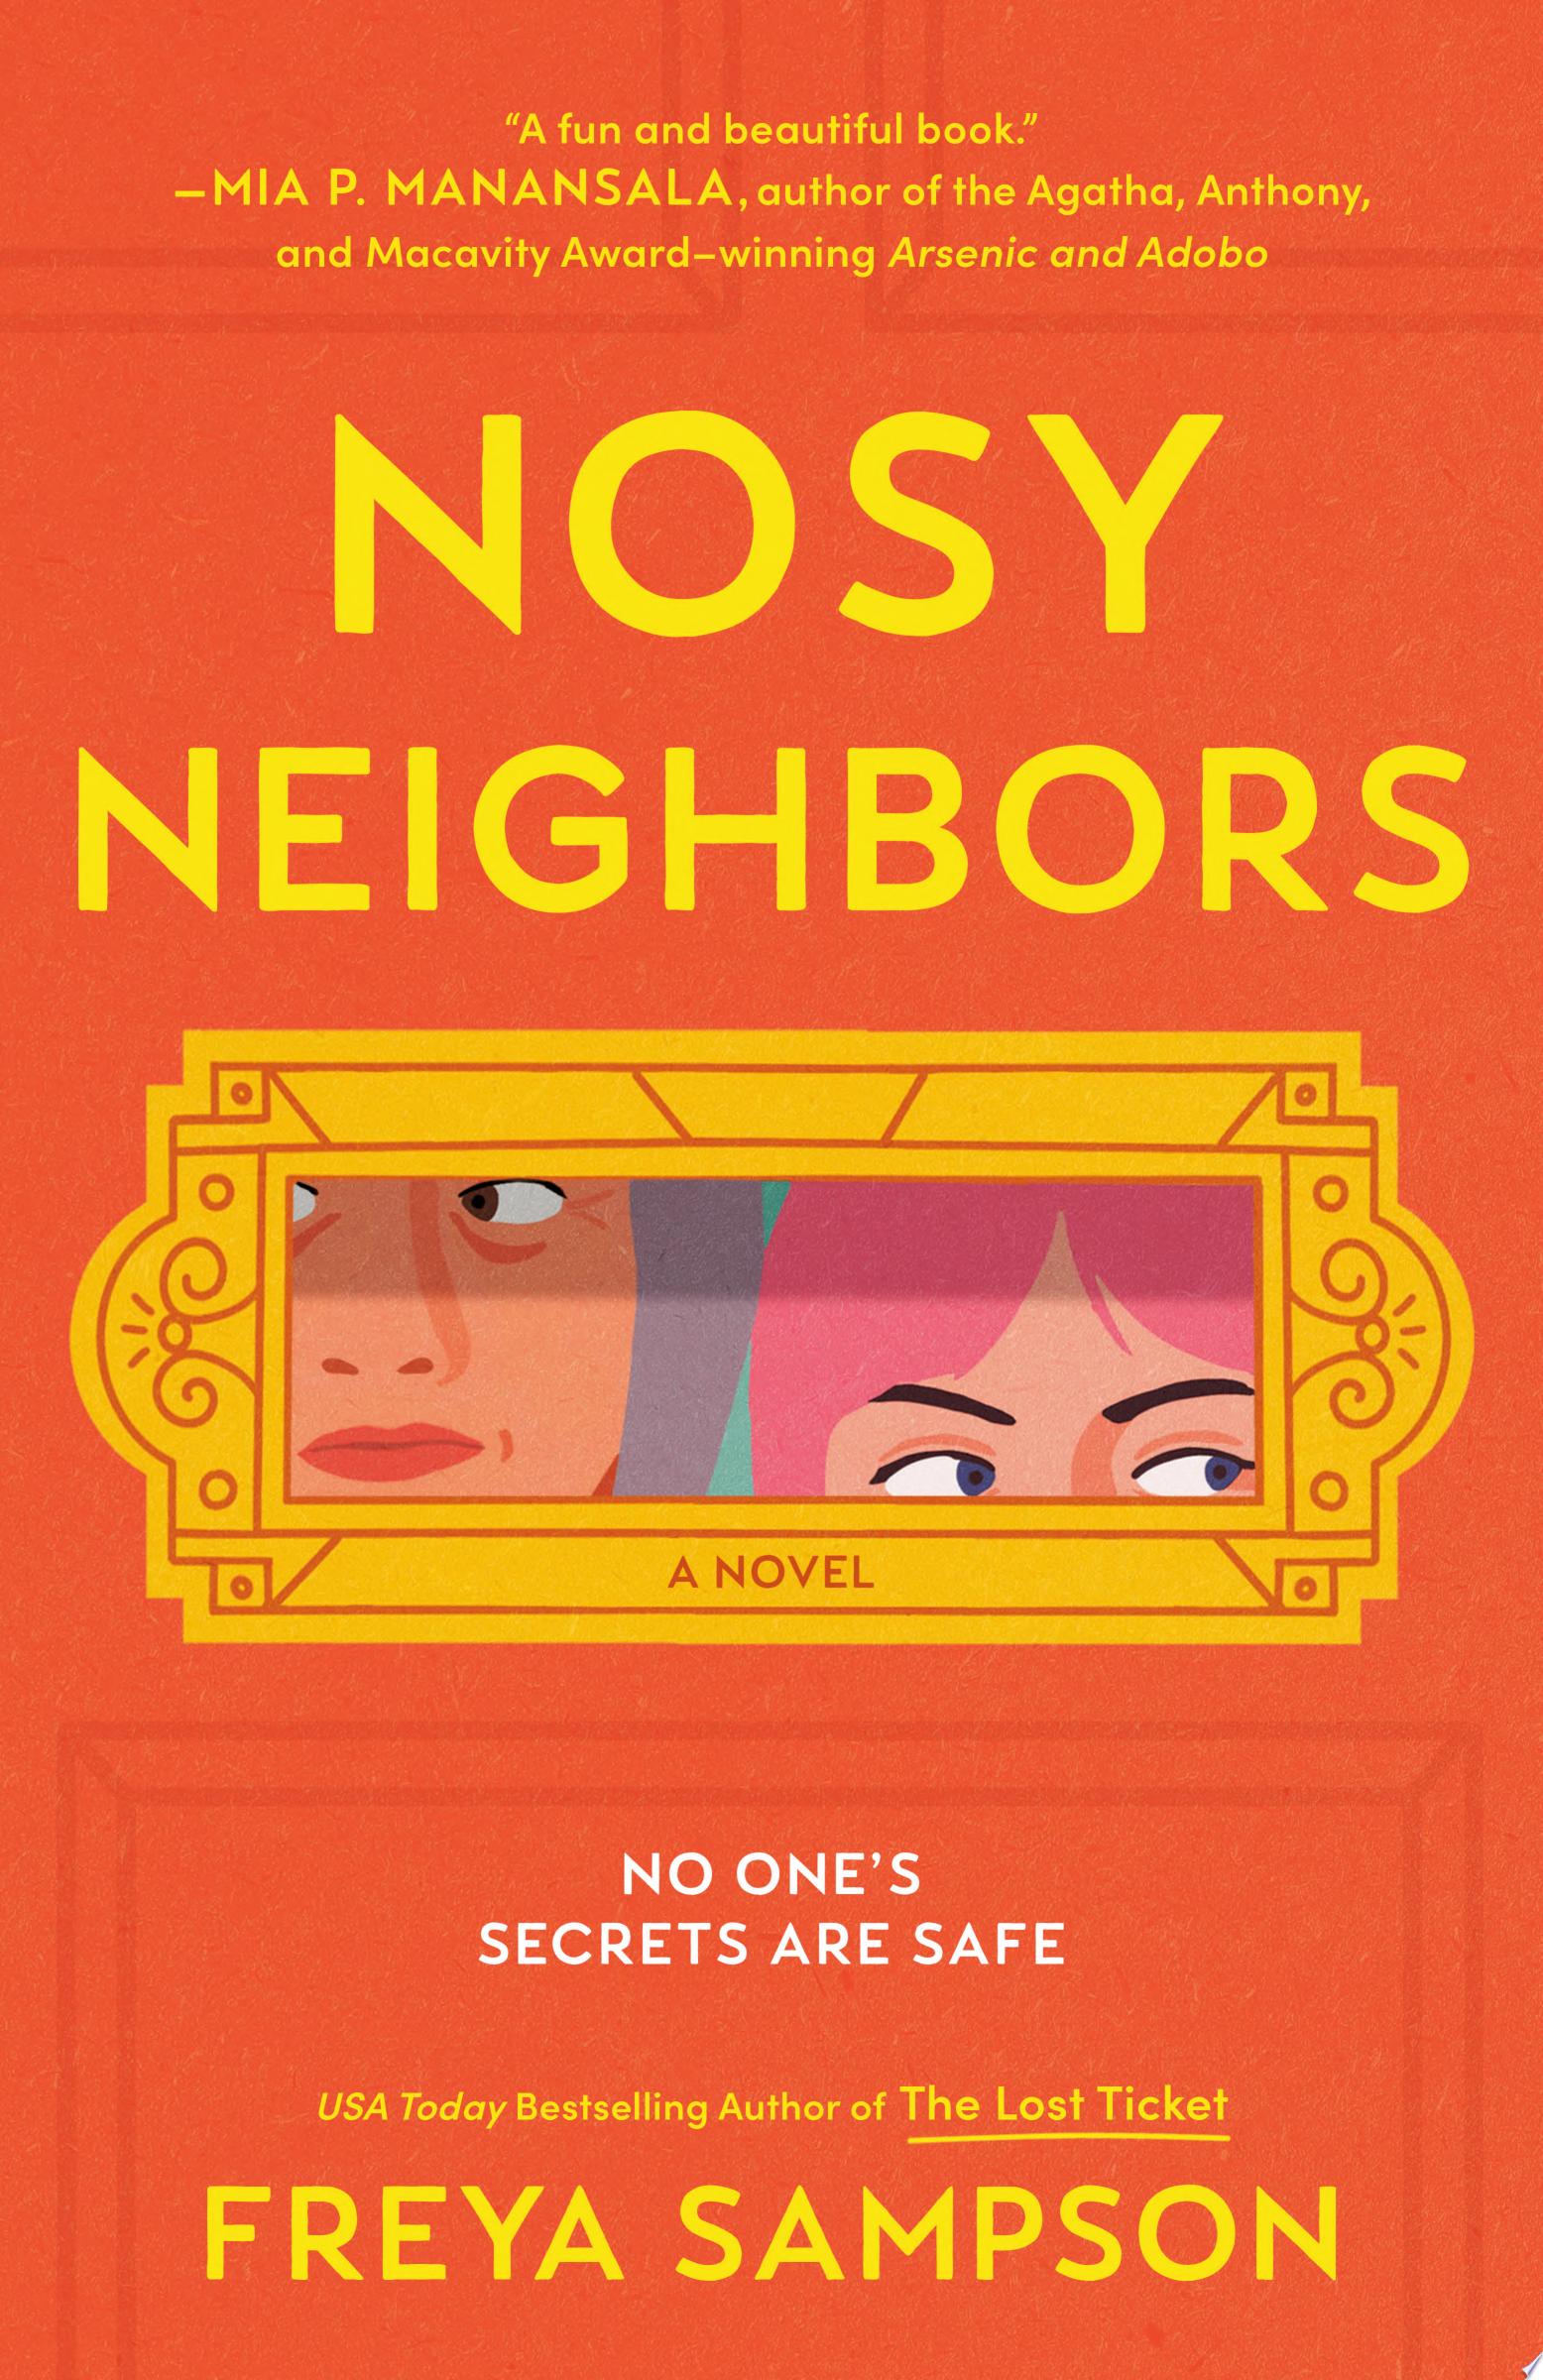 Image for "Nosy Neighbors" by Freya Sampson